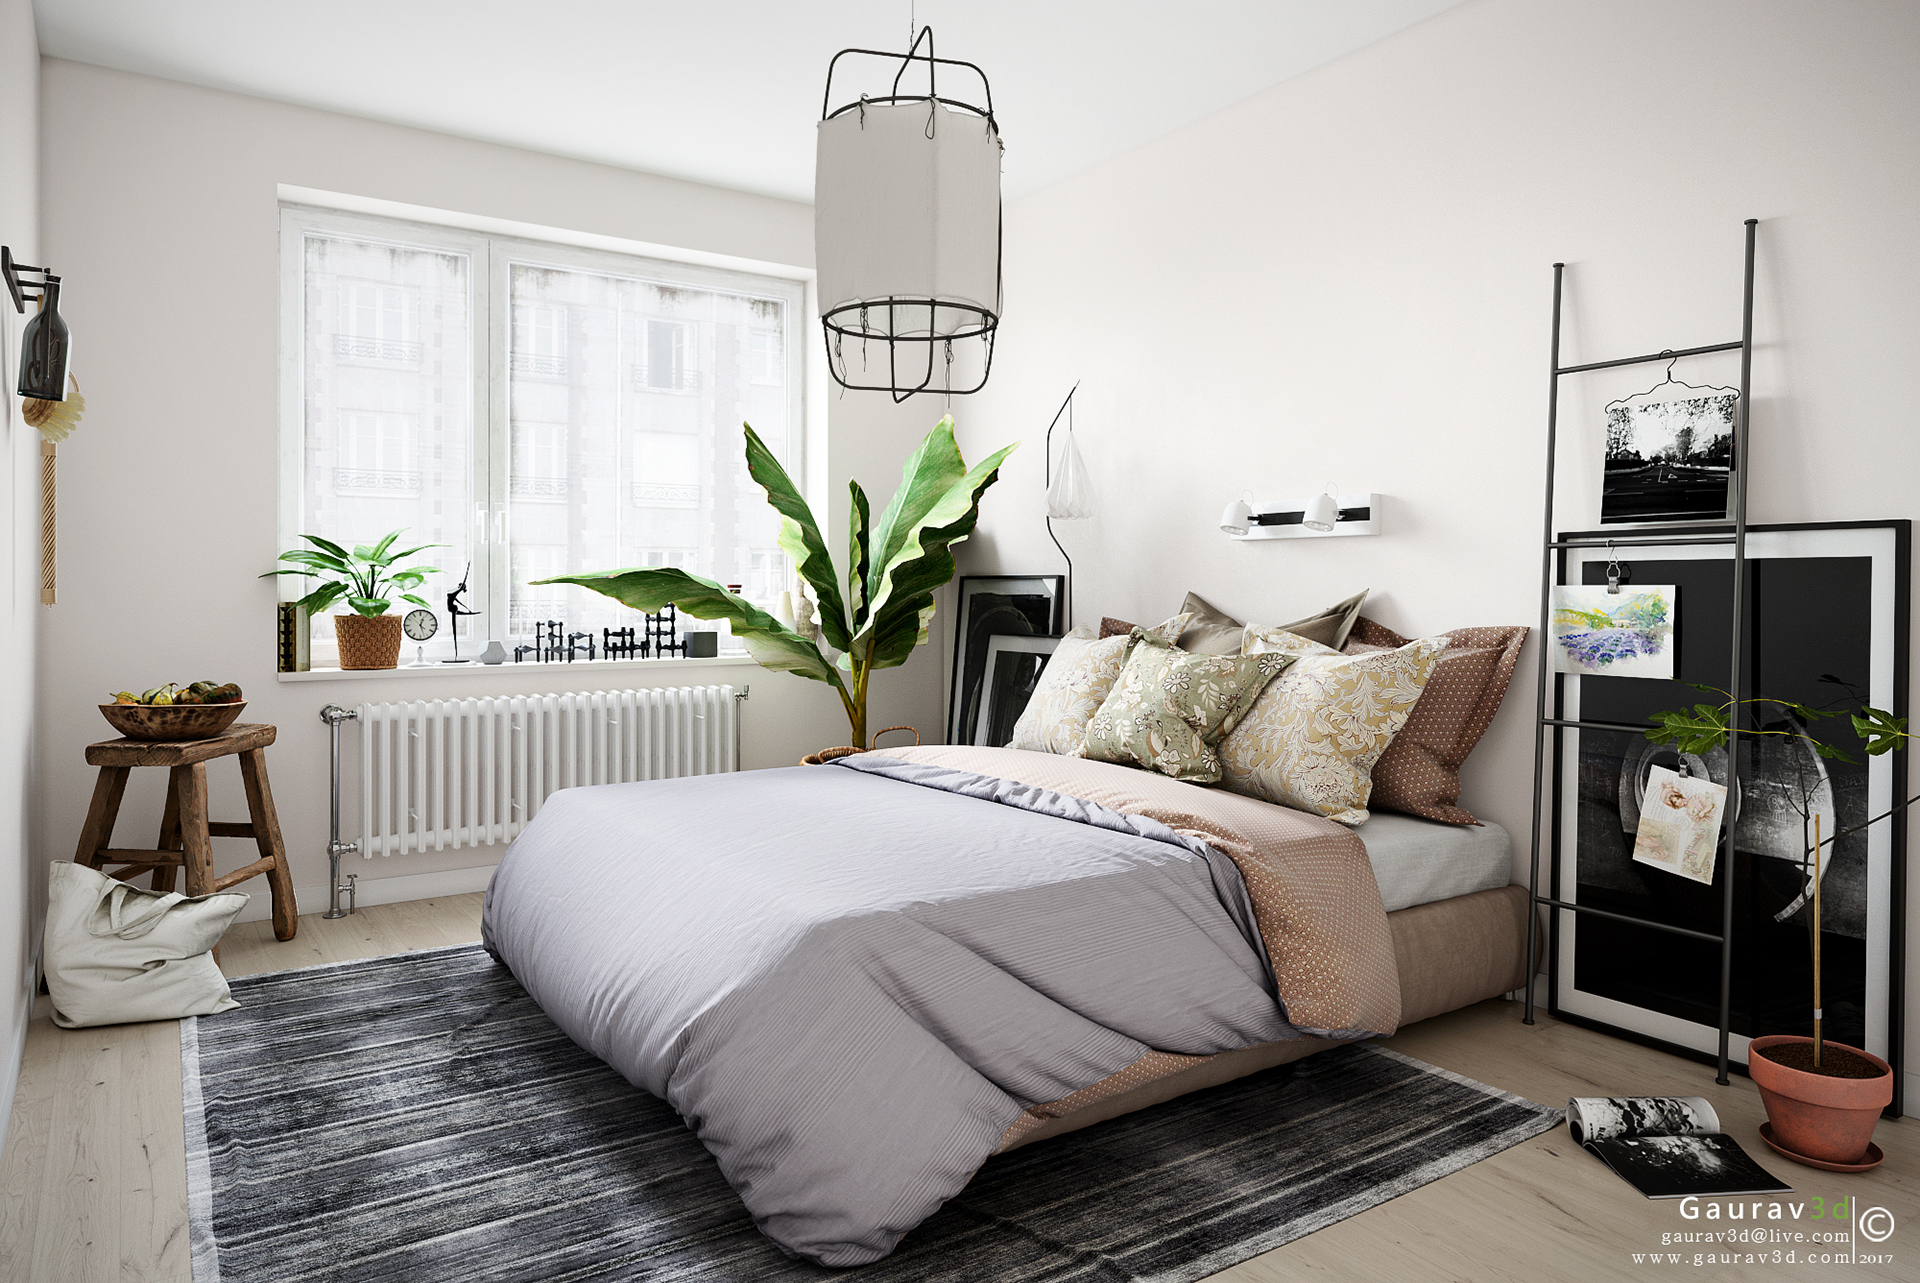 A Scandinavian Style Bedroom Ronen Bekerman 3d Architectural Visualization Rendering Blog,Designer Compact Mirror Uk